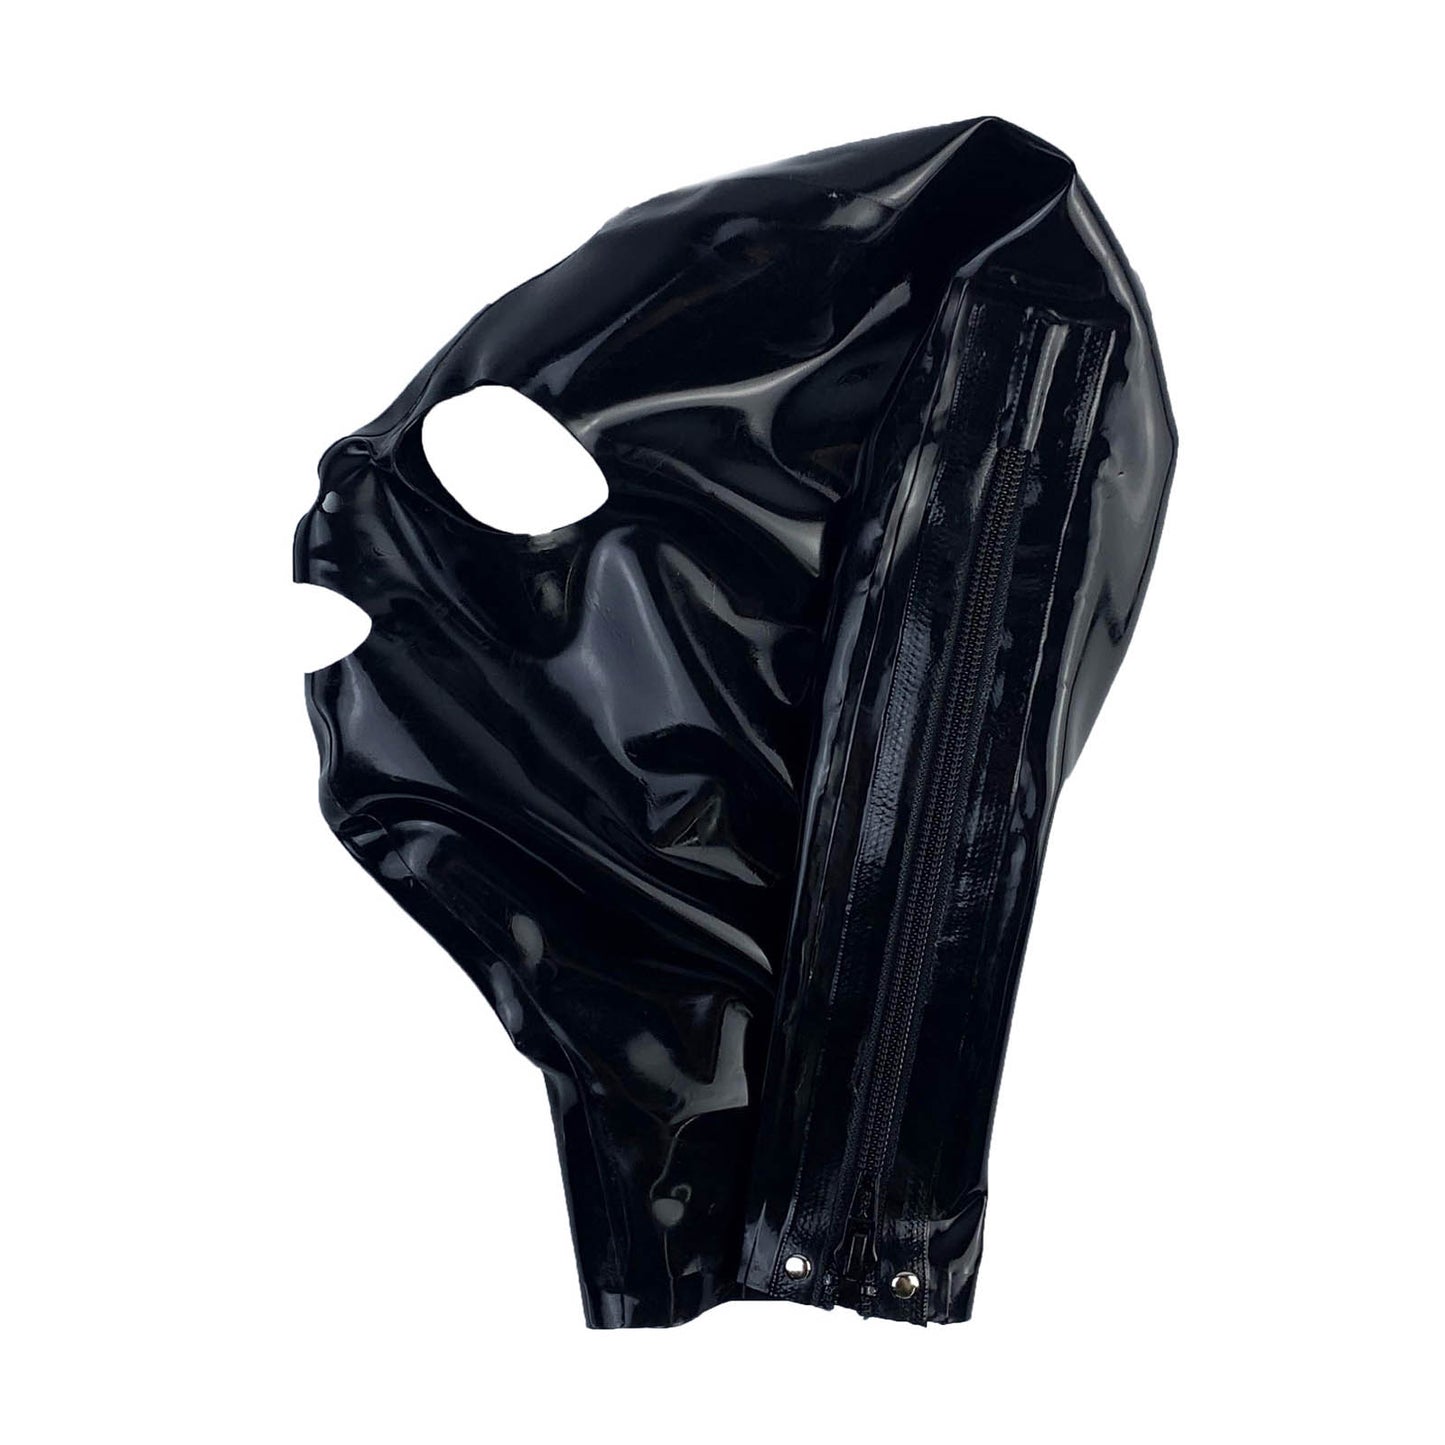 MONNIK Latex Mask Hood Black Open Eyes&mouth for Cosplay Halloween Party Wear Bodysuit